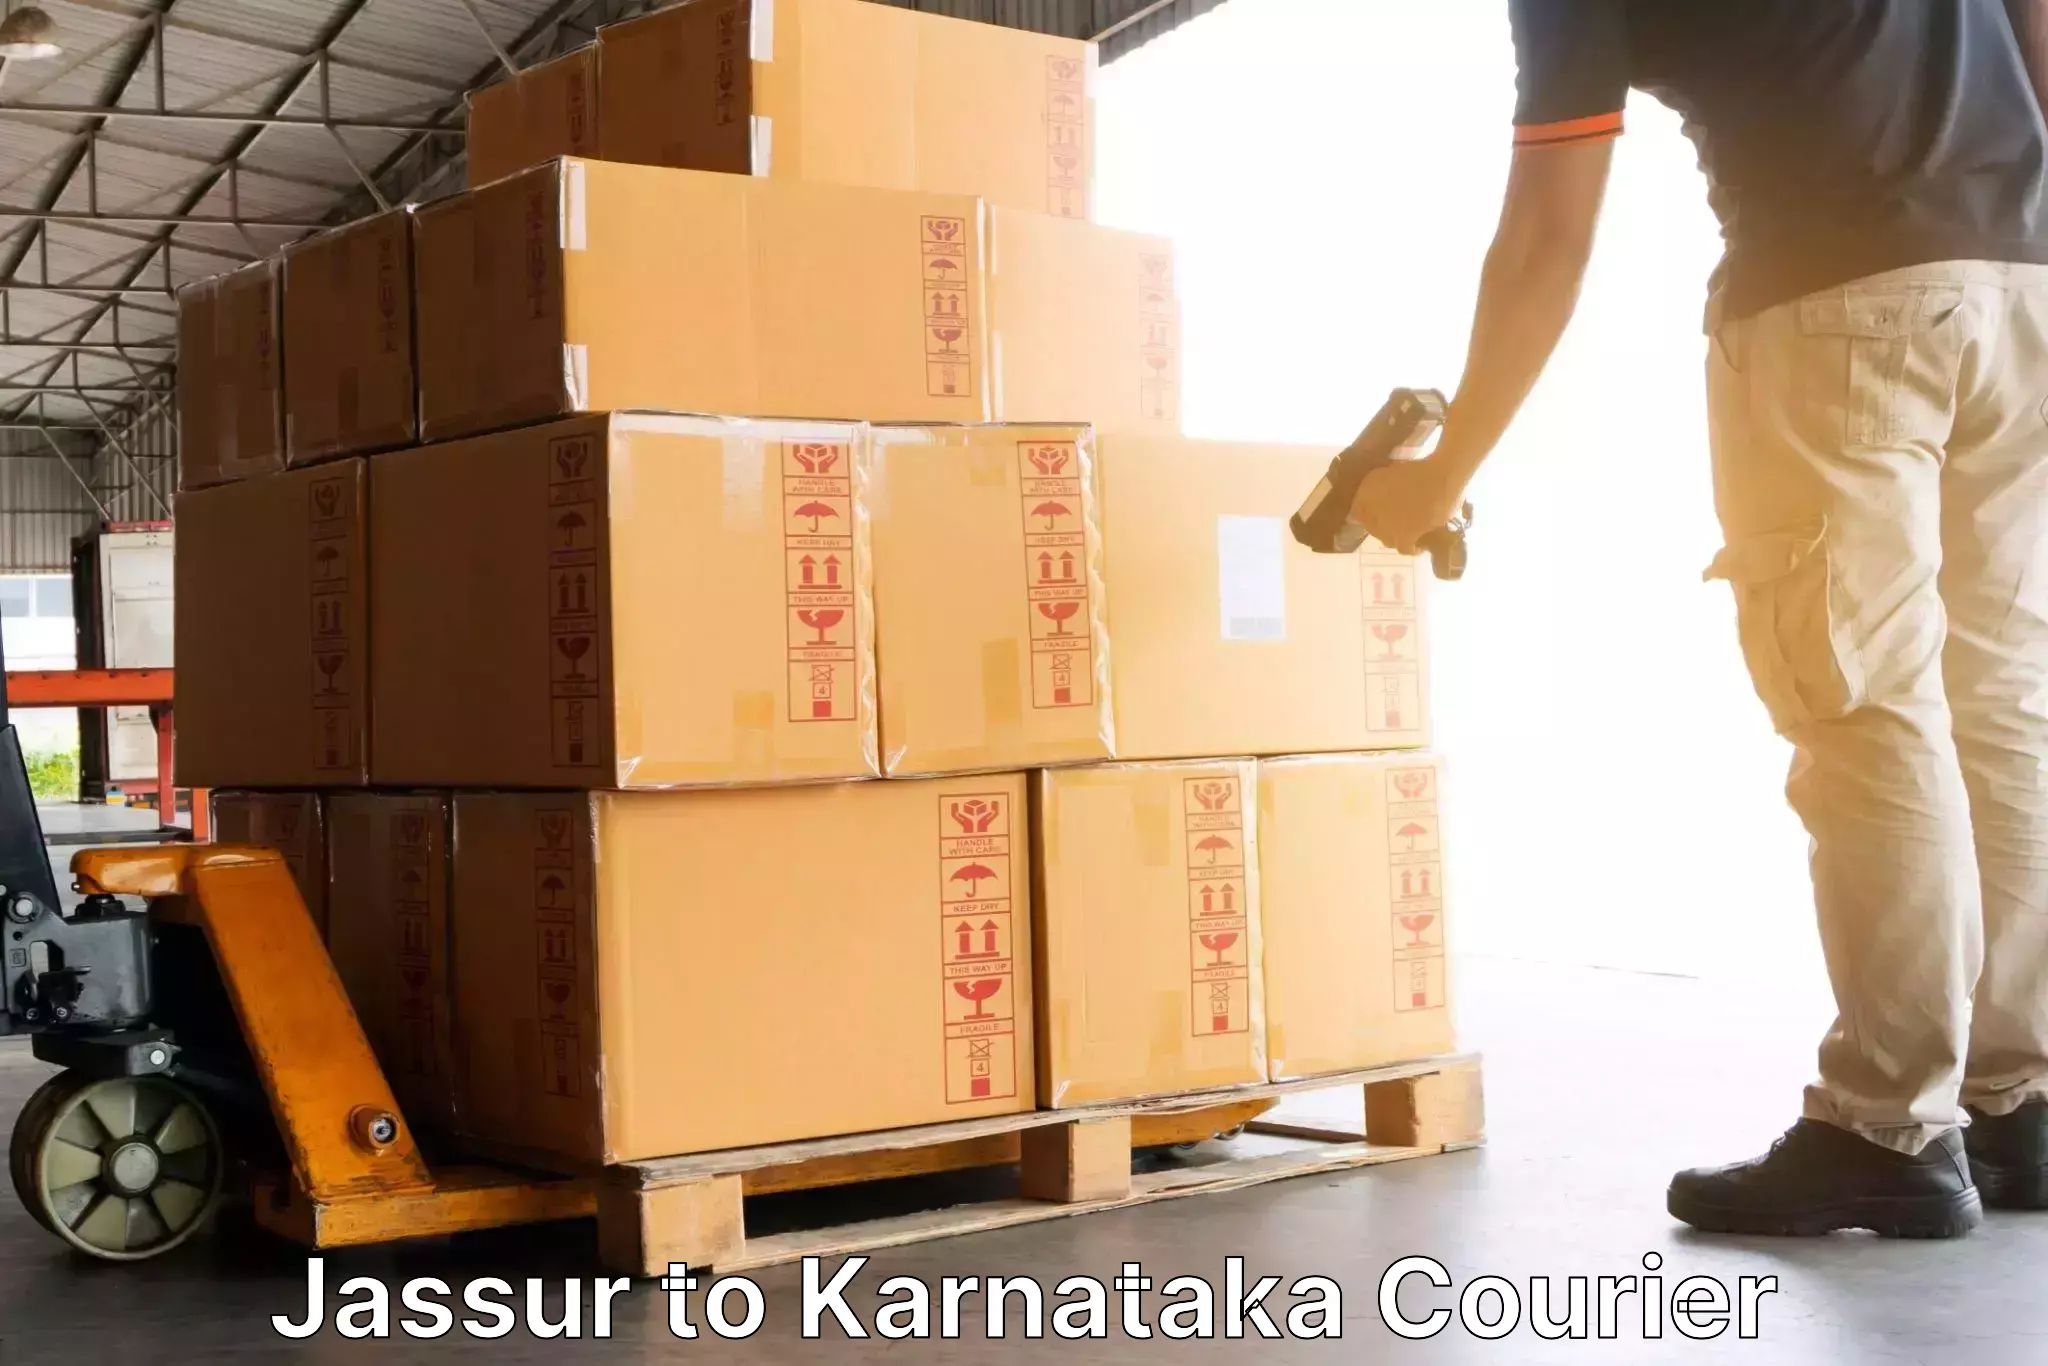 Global courier networks Jassur to Karnataka